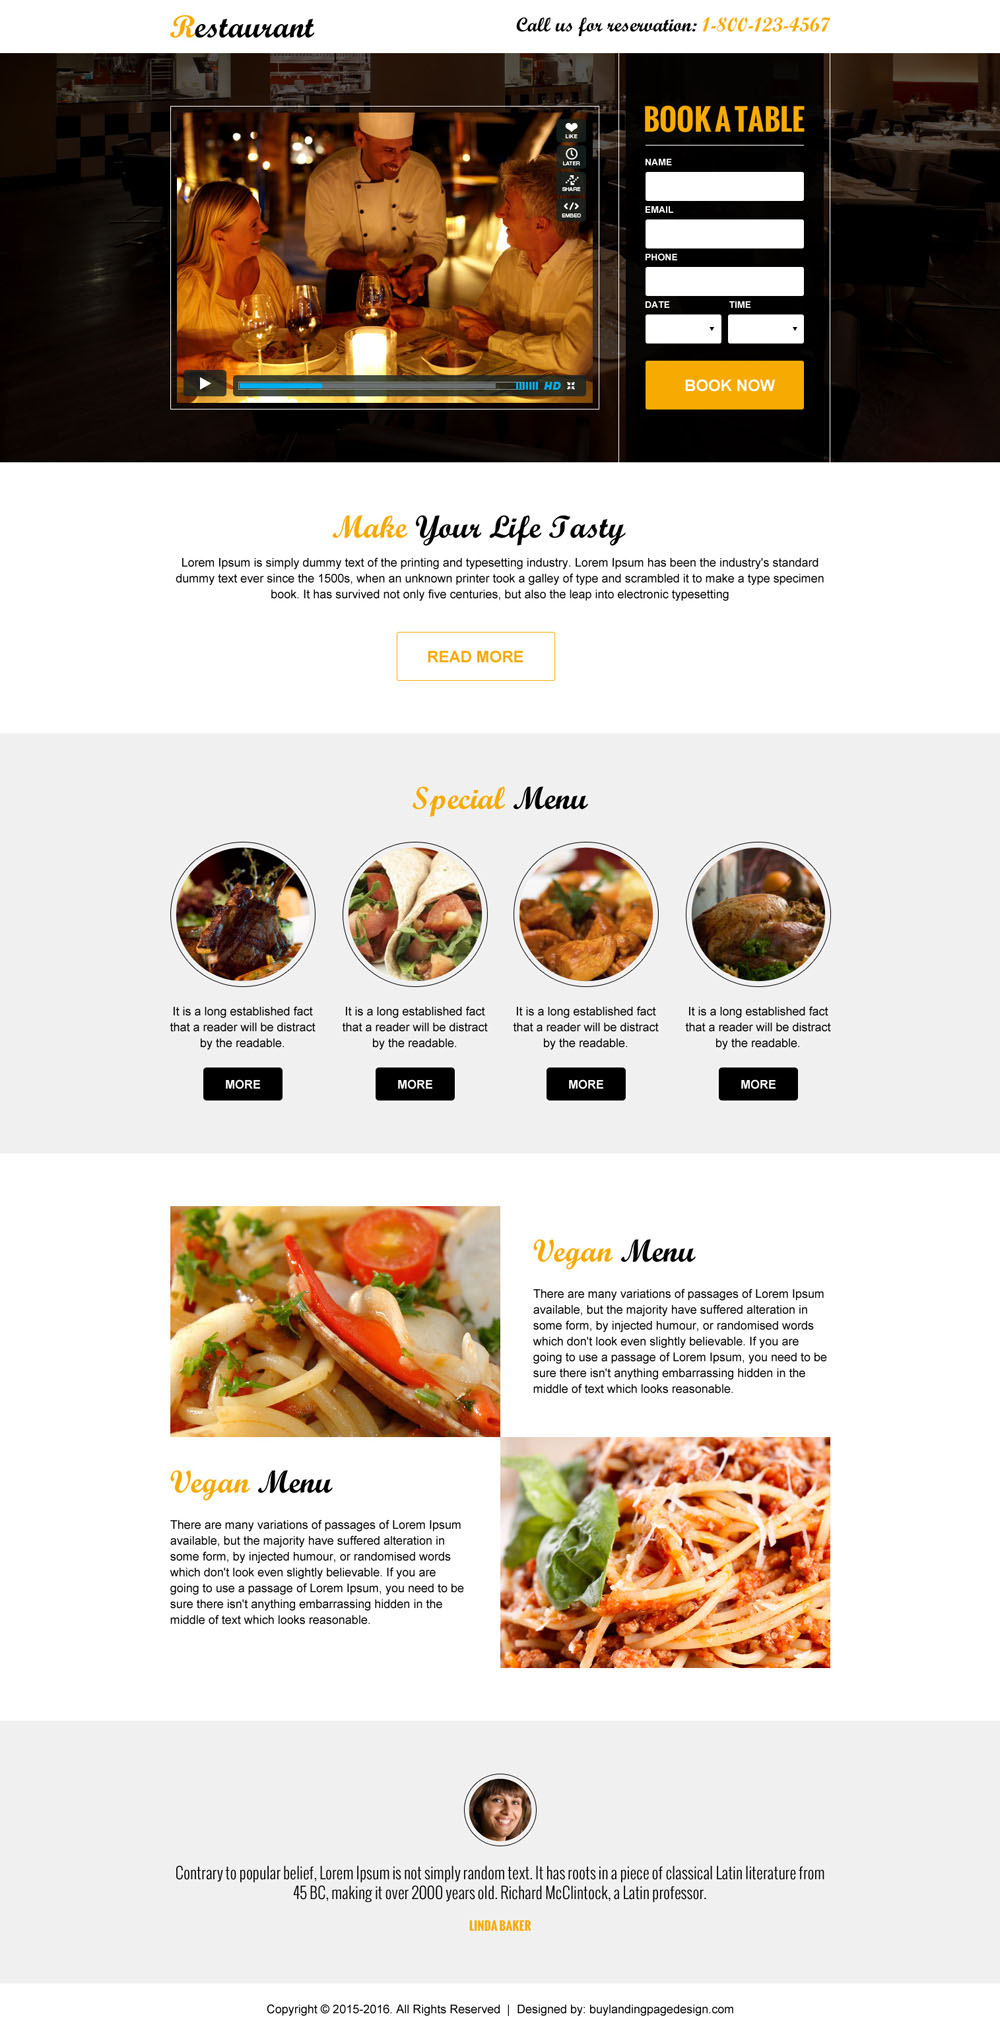 restaurant-booking-lead-gen-converting-video-landing-page-design-003